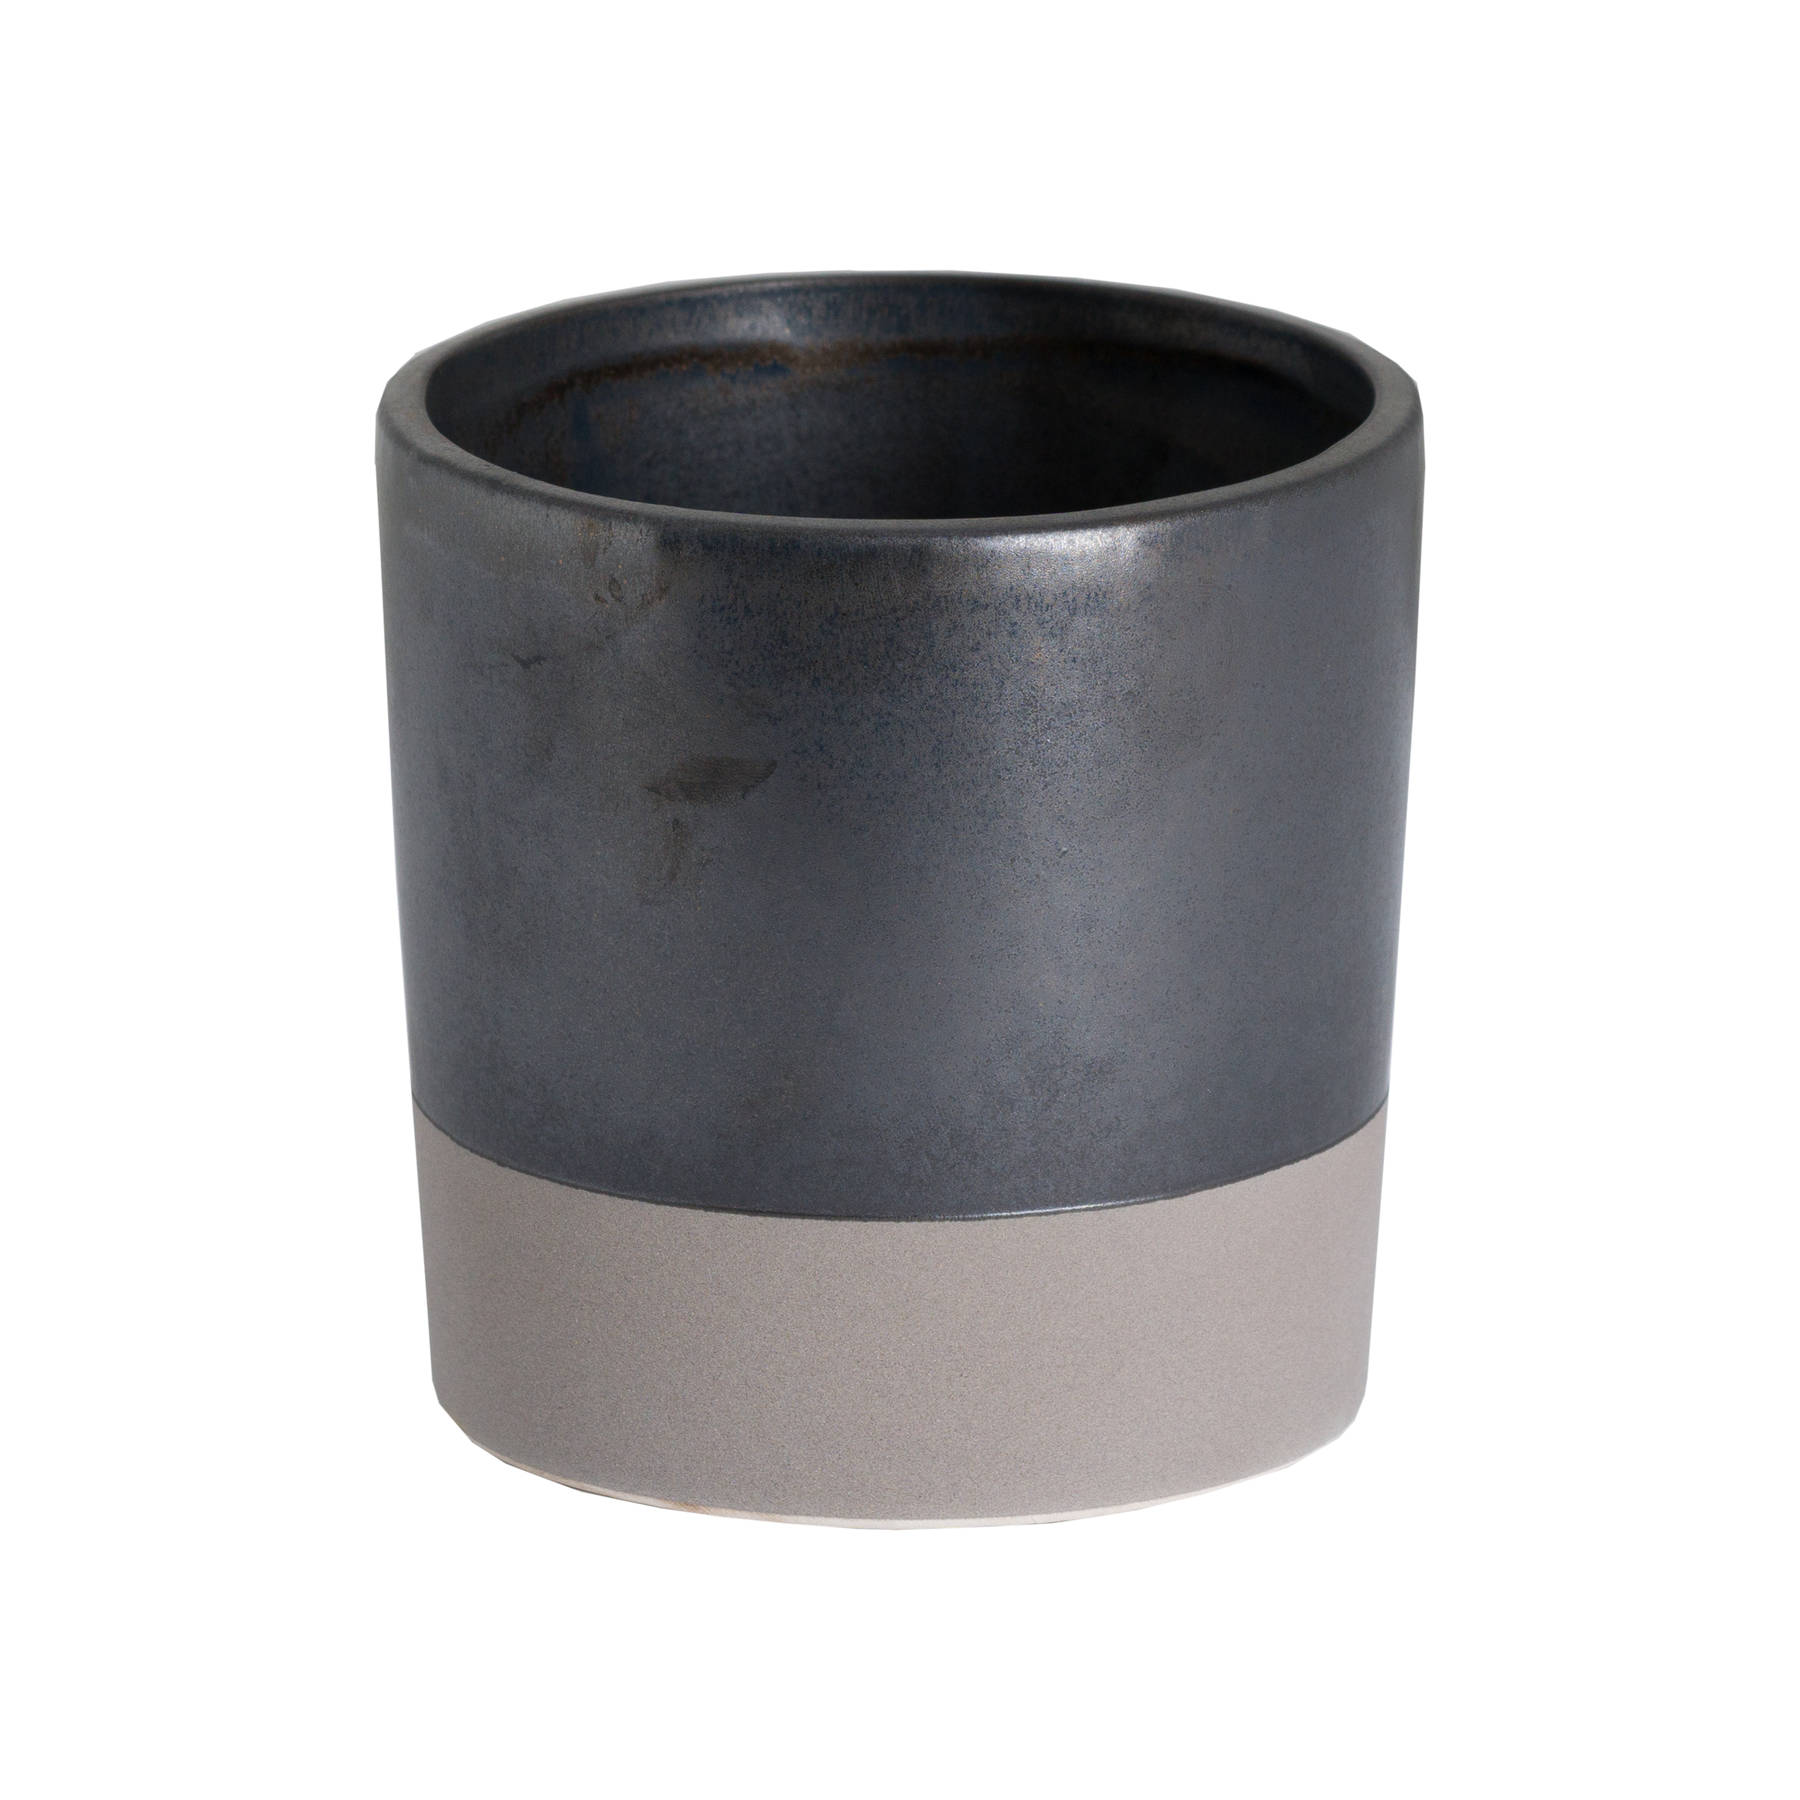 Metallic Grey Ceramic Planter - Image 1